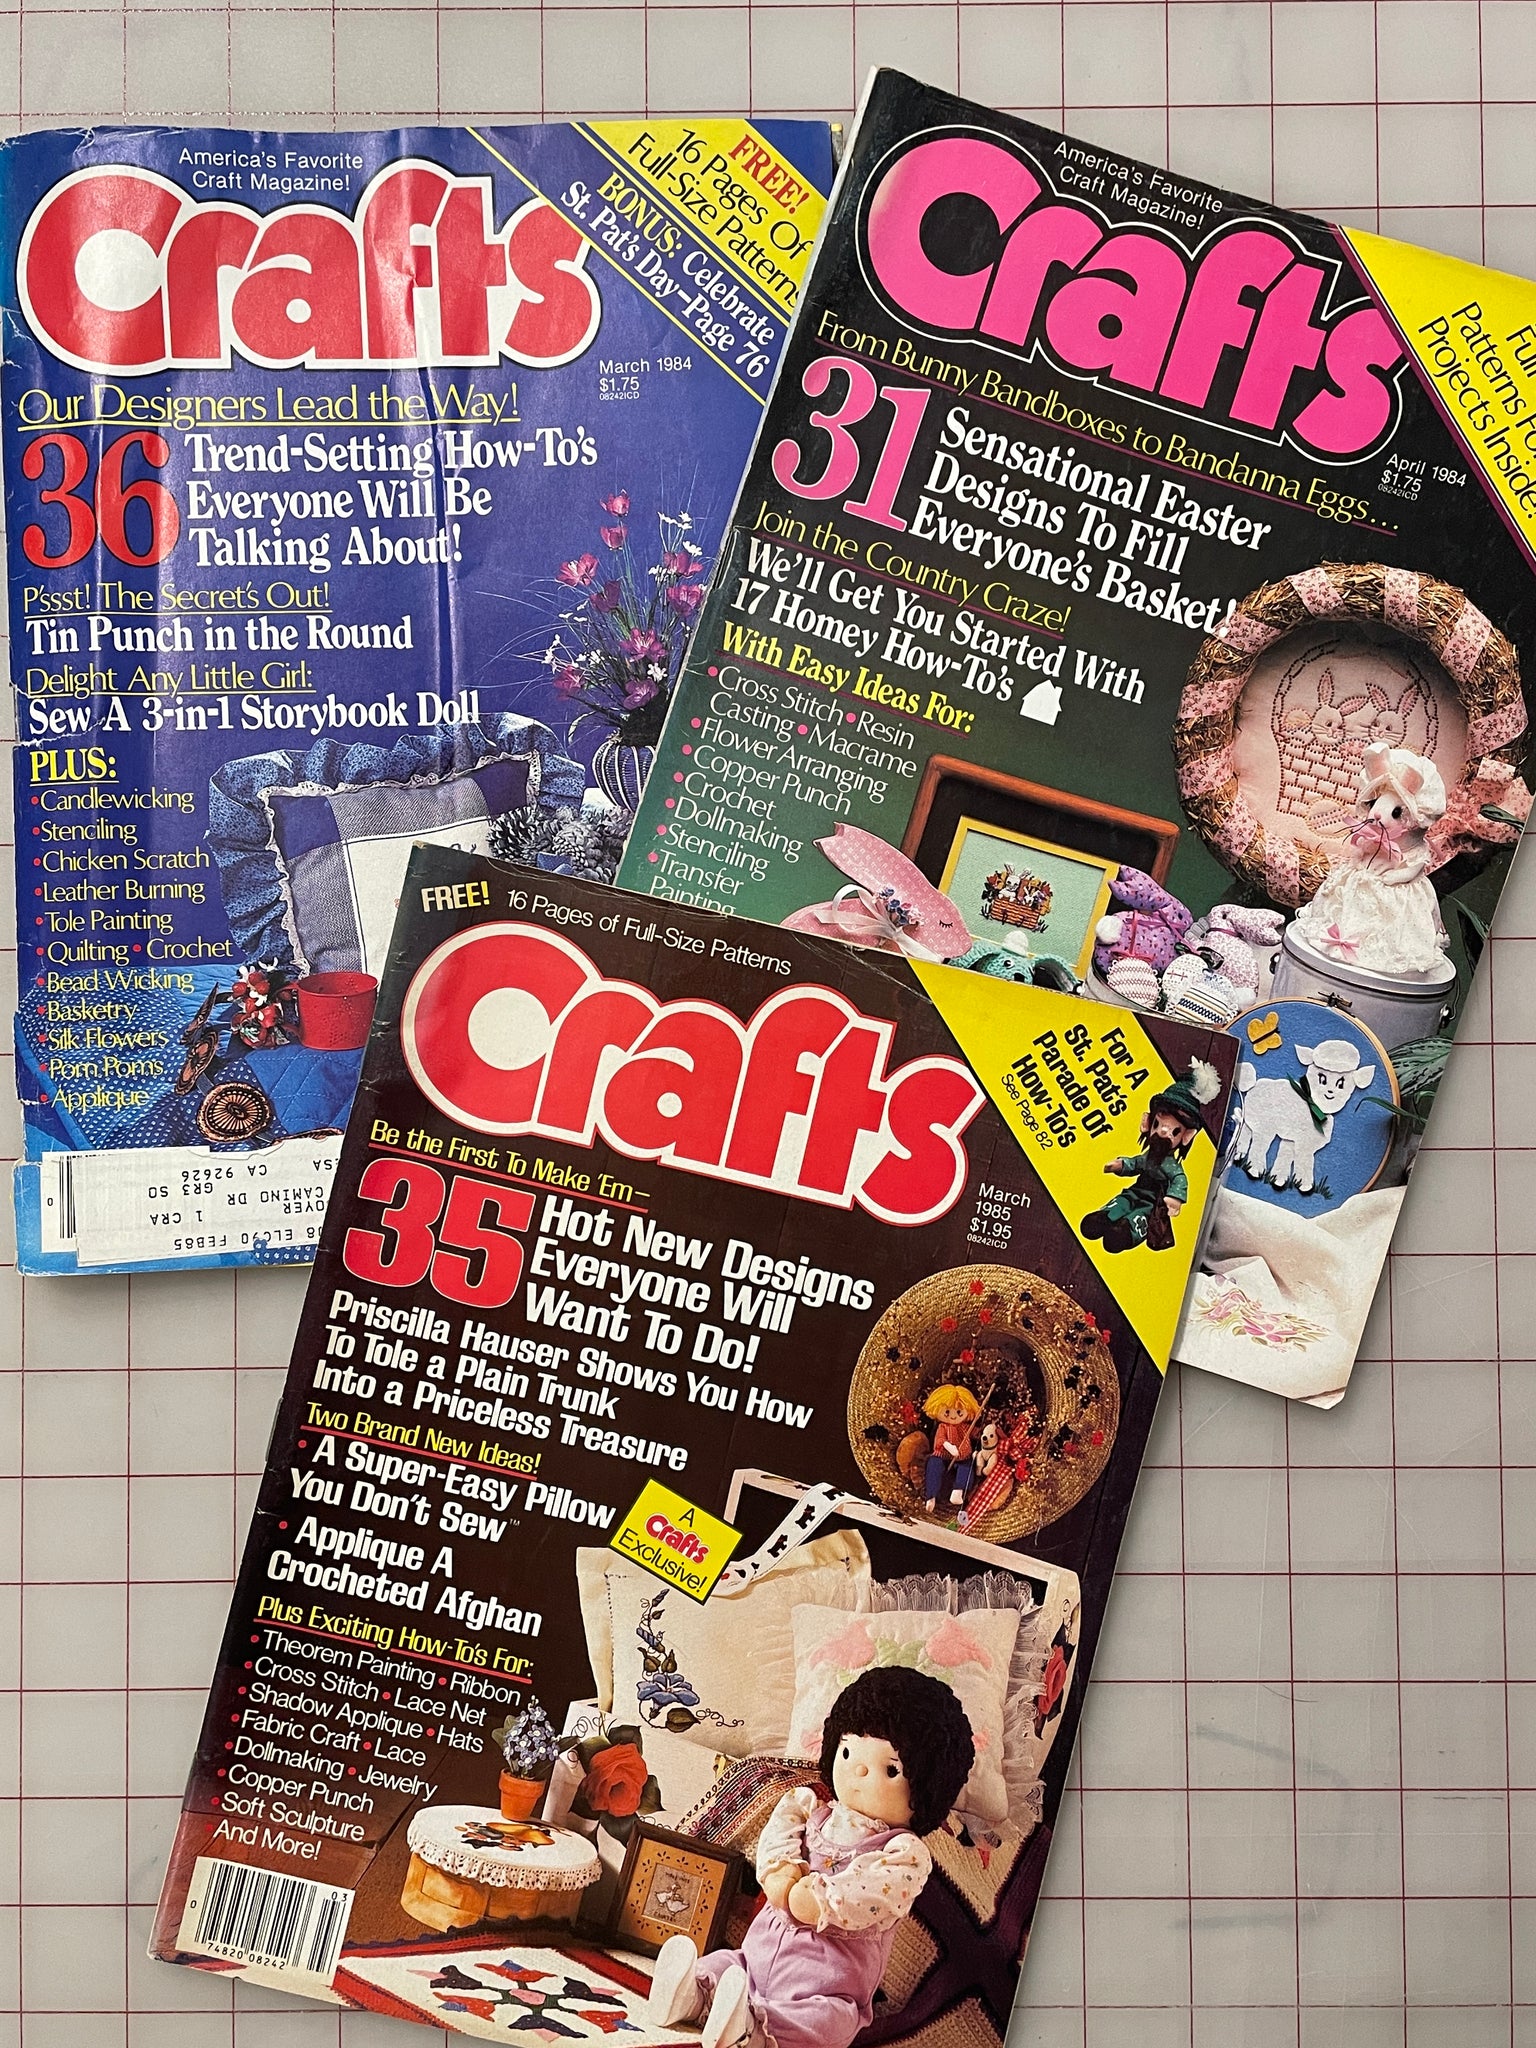 SALE 1980's Craft Magazine Bundle - "Crafts"